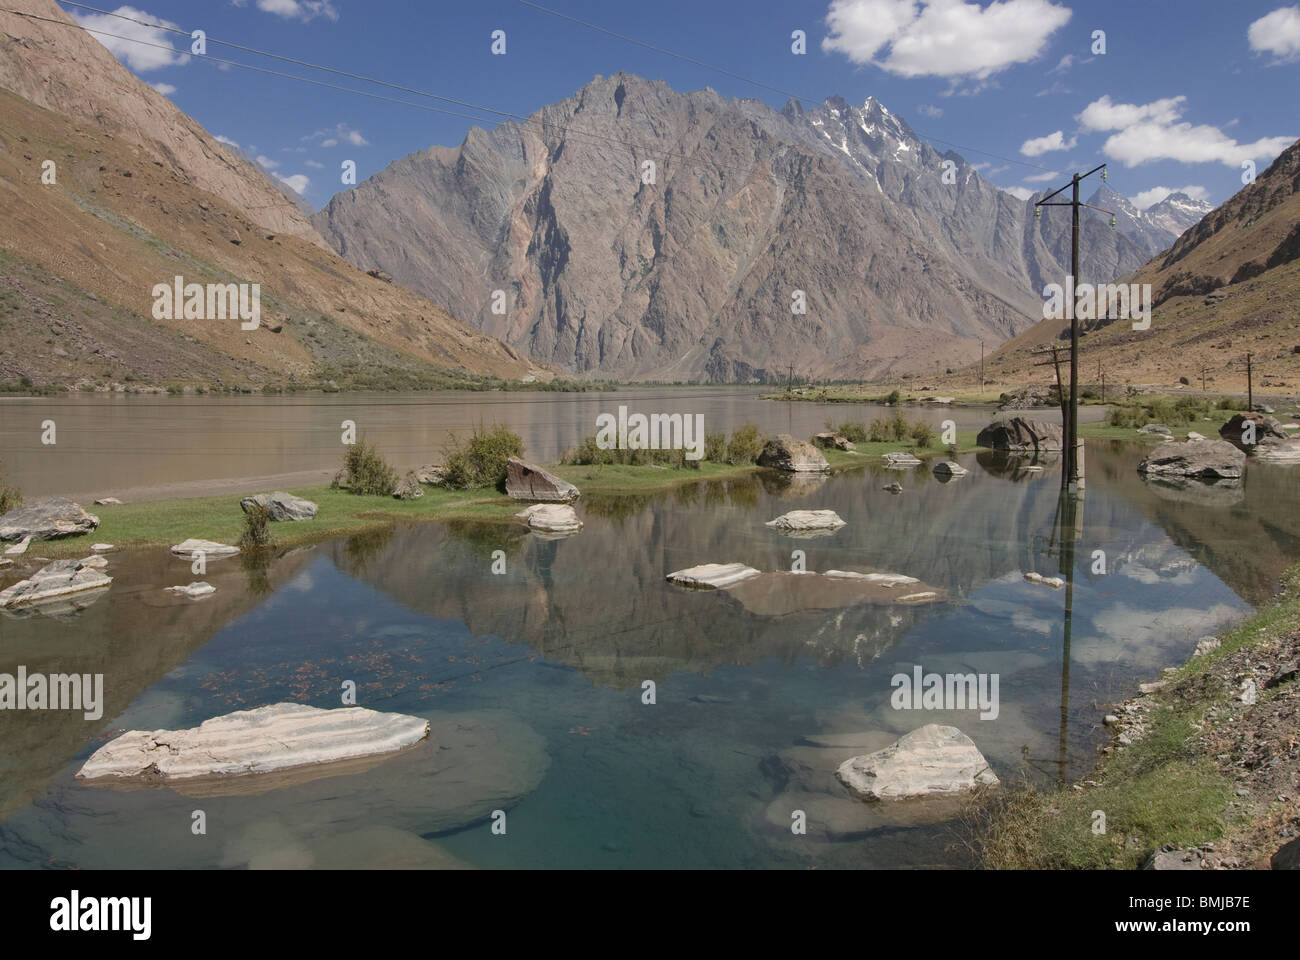 Gunt River flowing through mountainous landscape, Khorog,Tajikistan Stock Photo